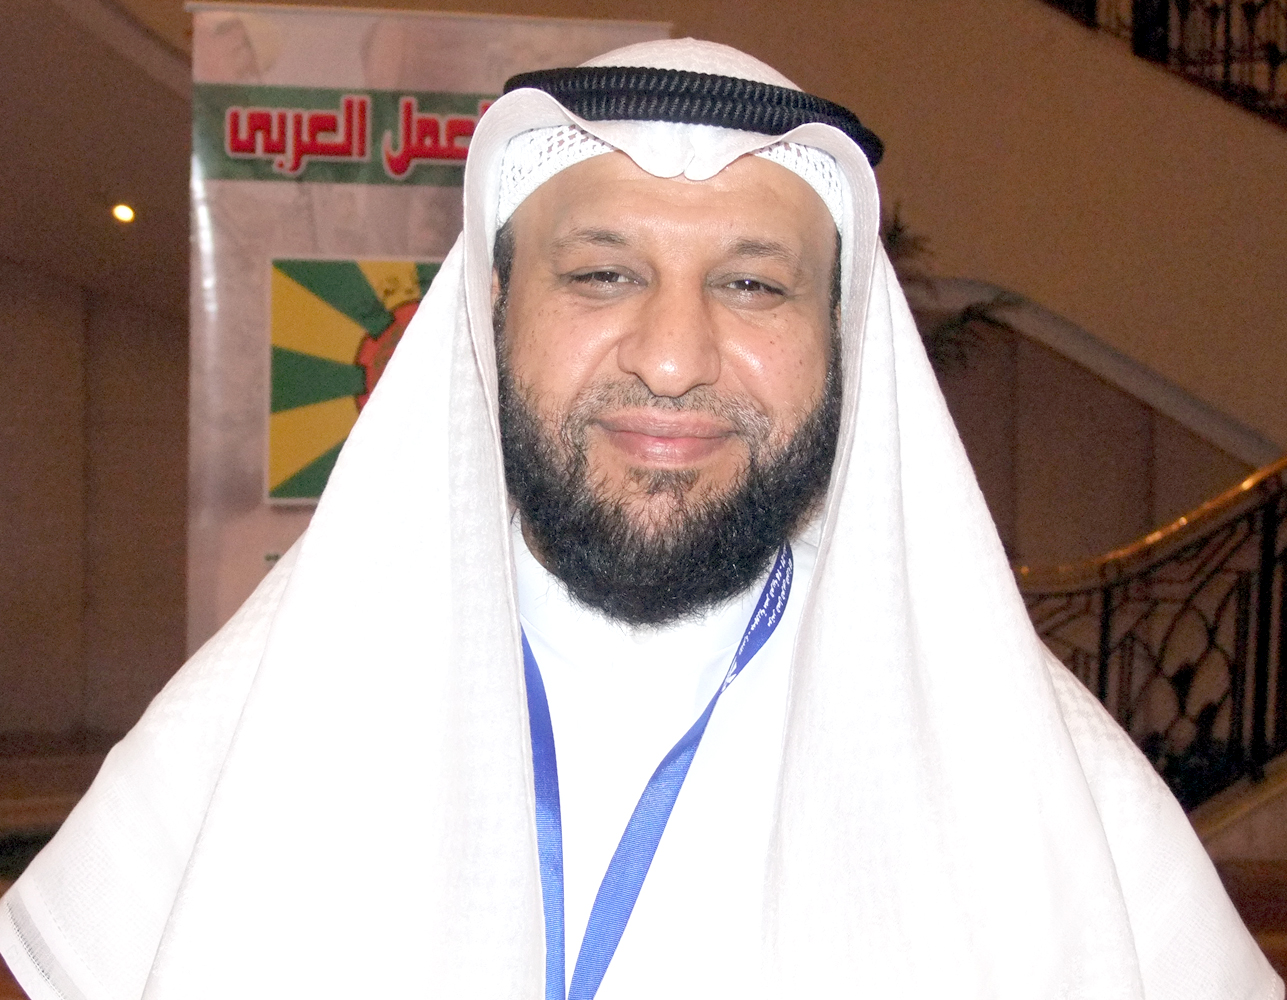 Director-General of Kuwait's Public Authority for Manpower (PAM), Jamal Al-Dosari